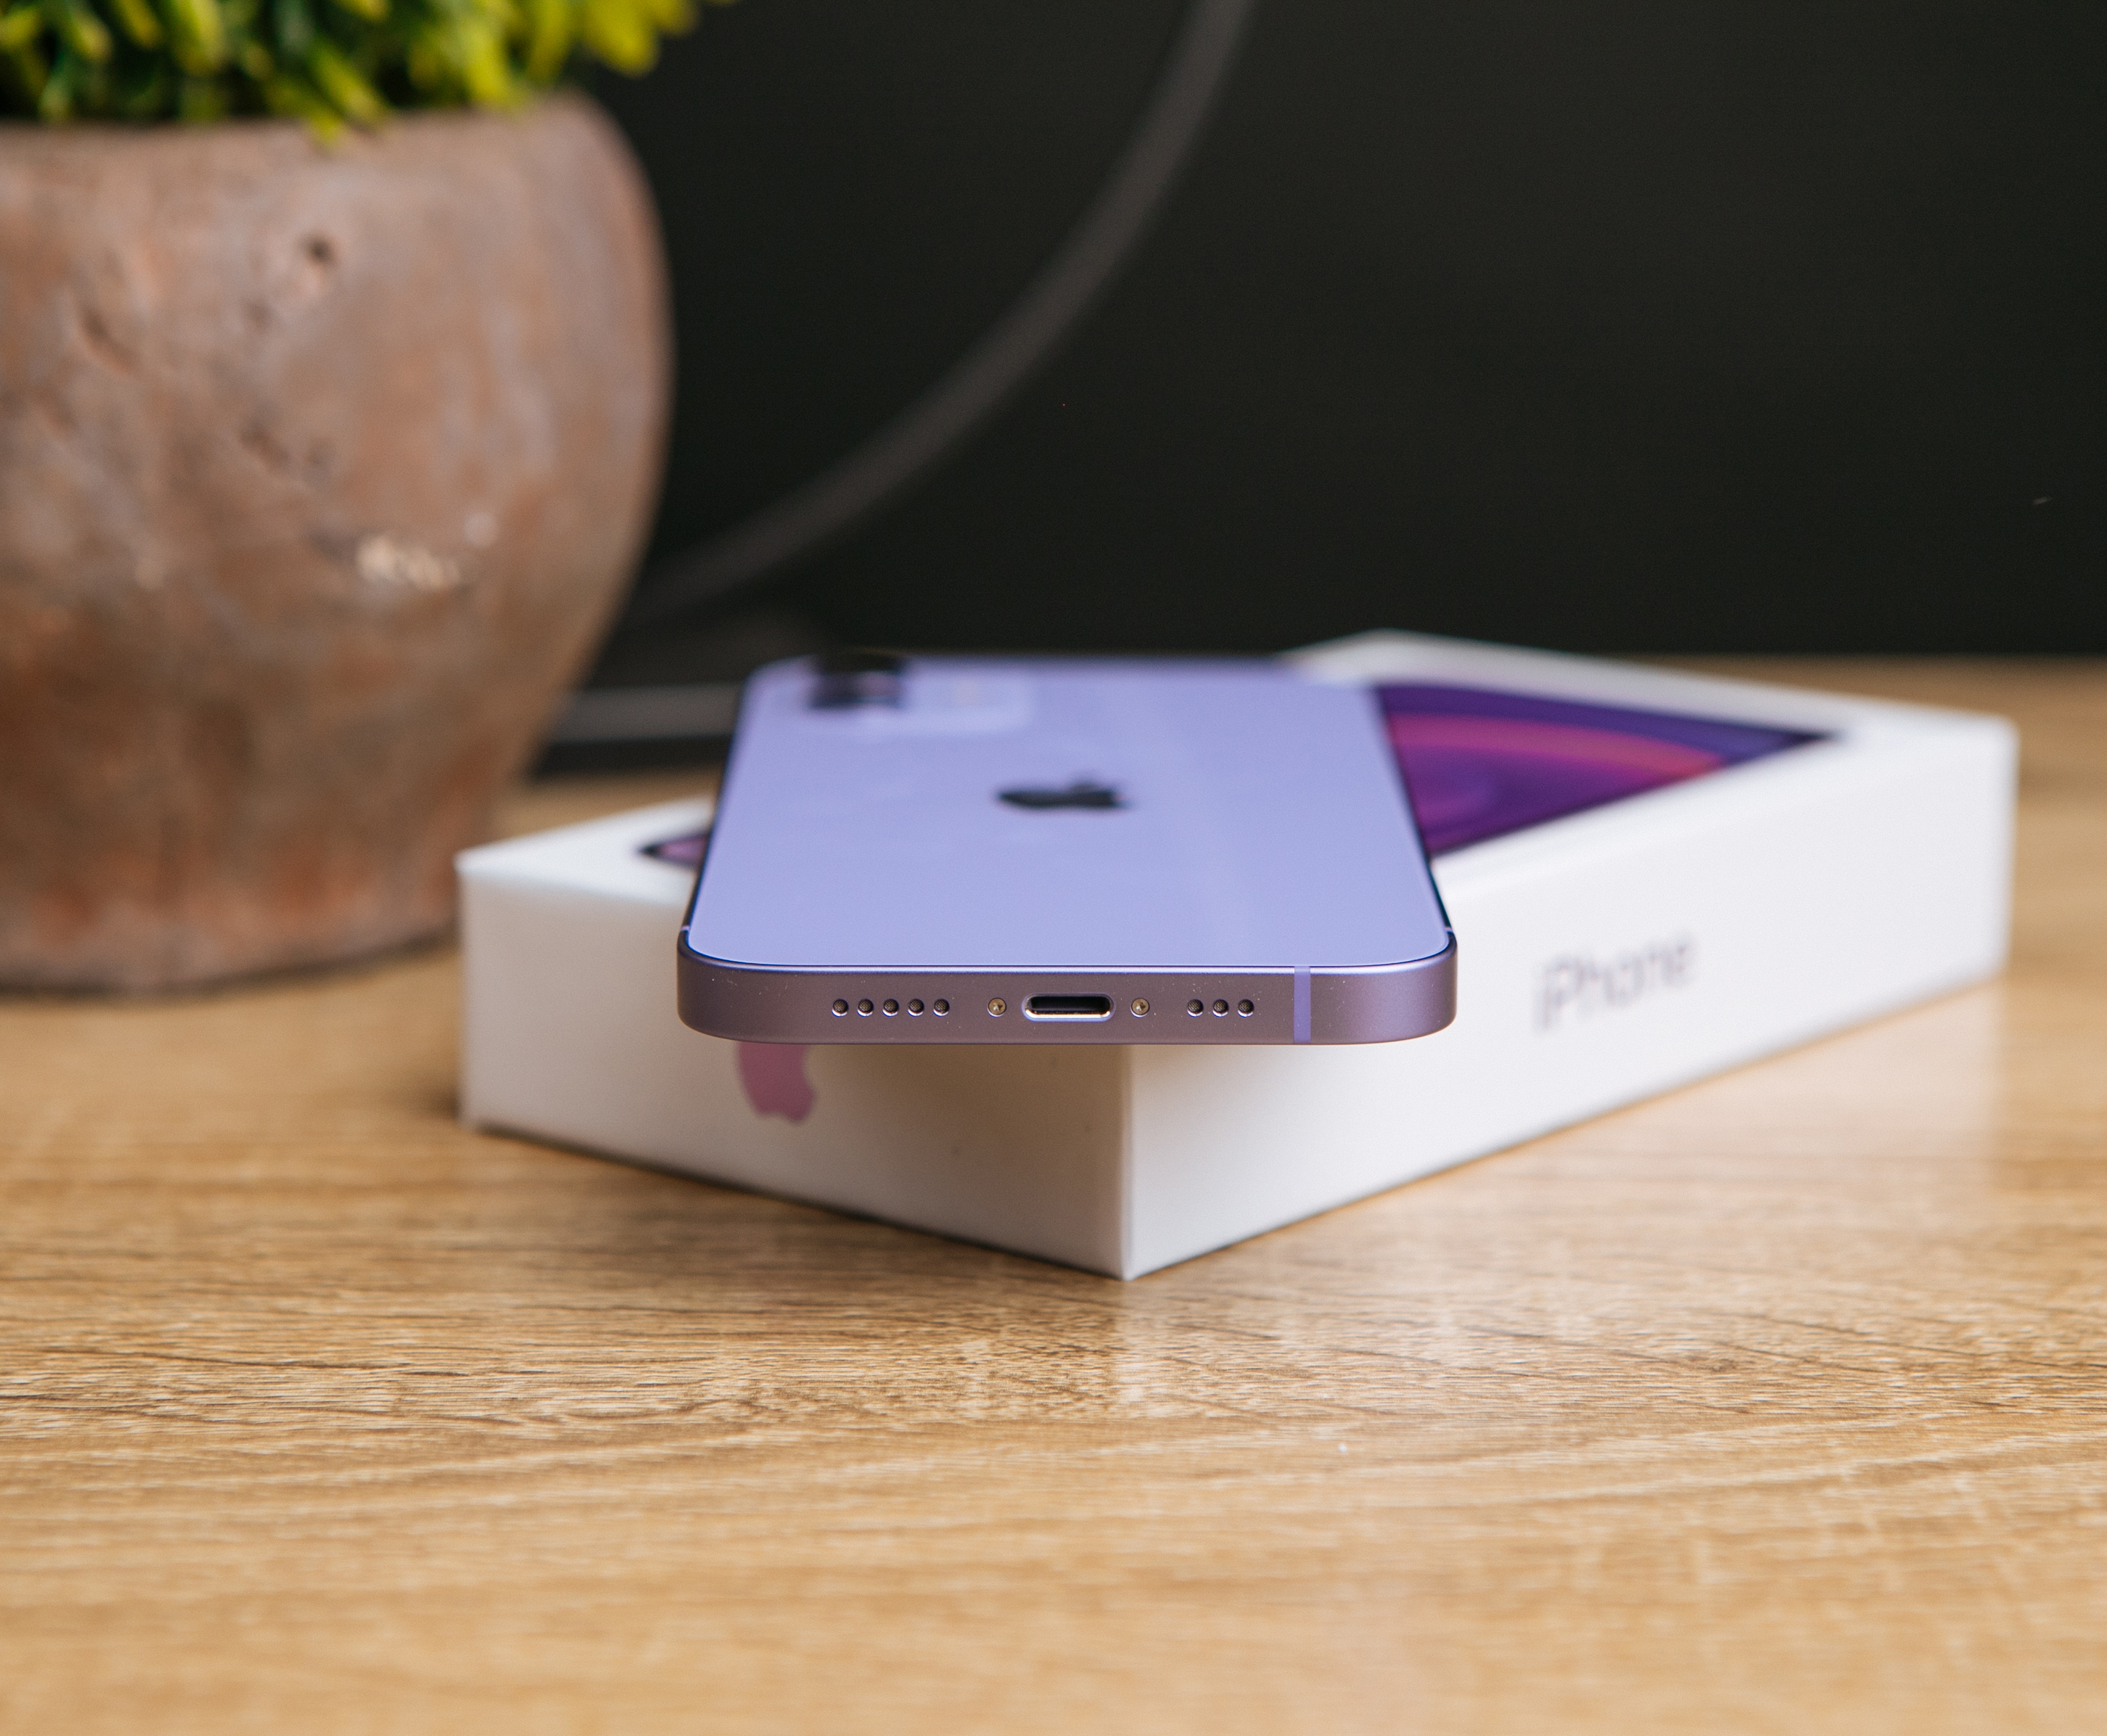 iPhone 12 64gb, Purple (MJNM3) б/у